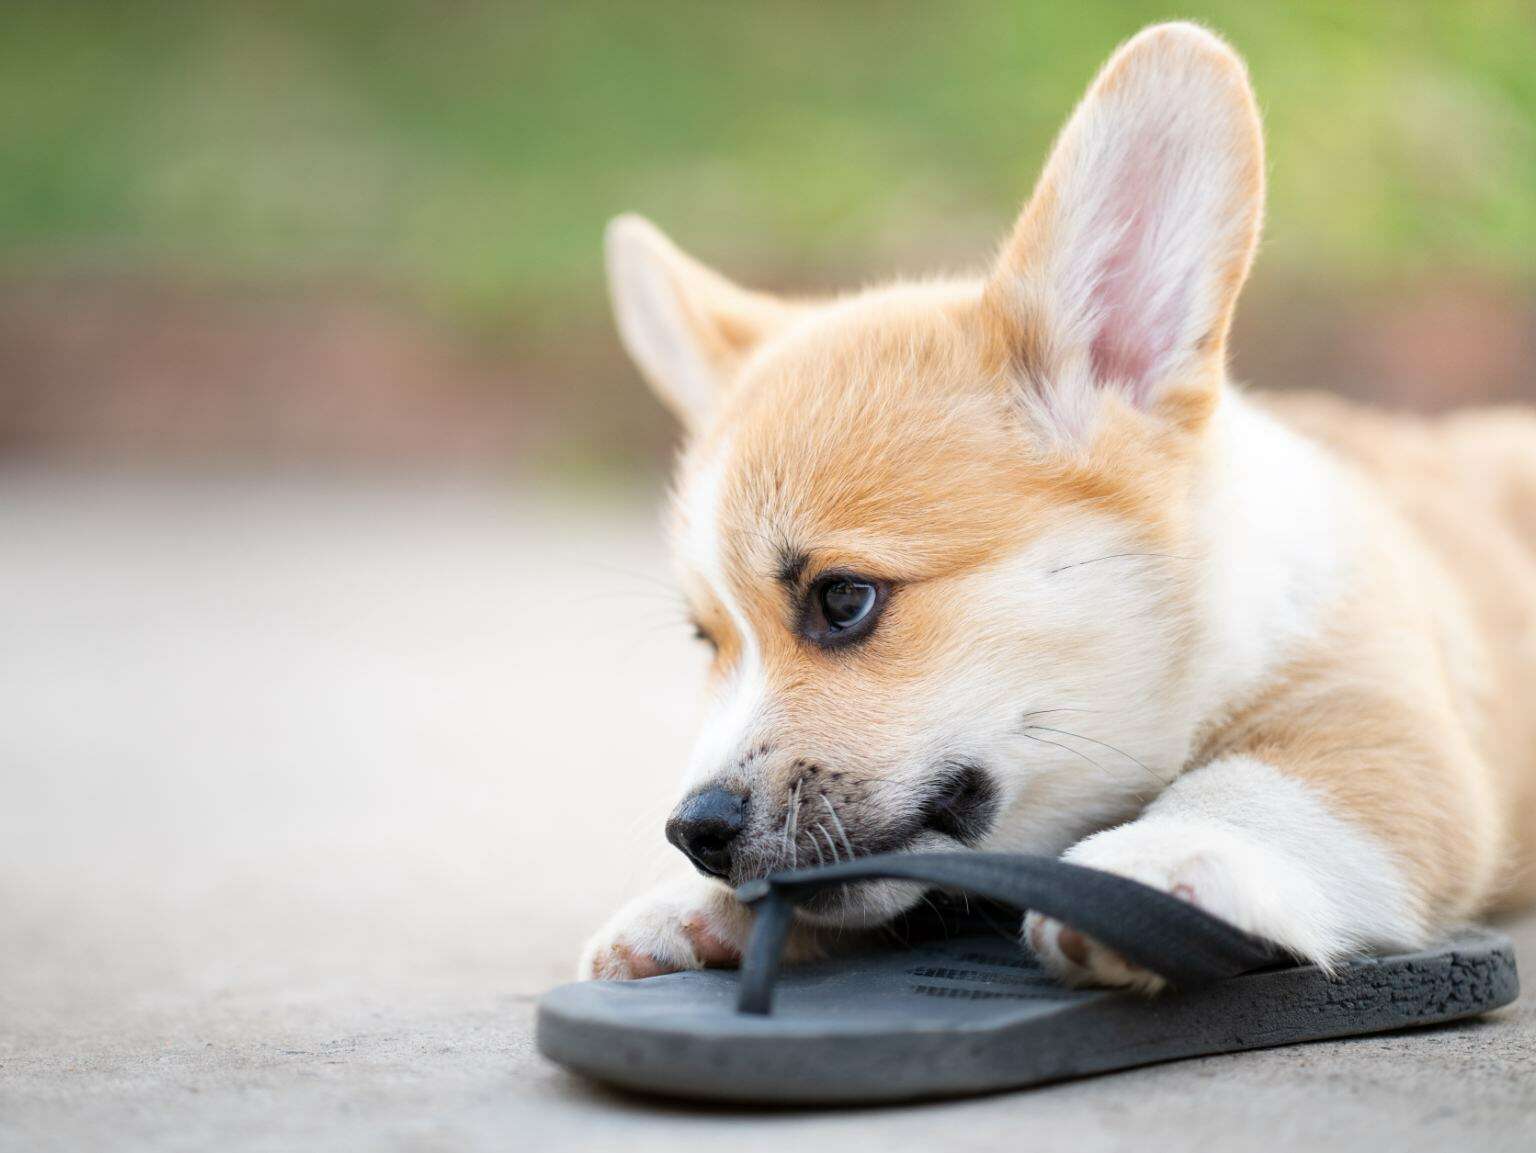 A Corgi puppy nibbling on a black sandal